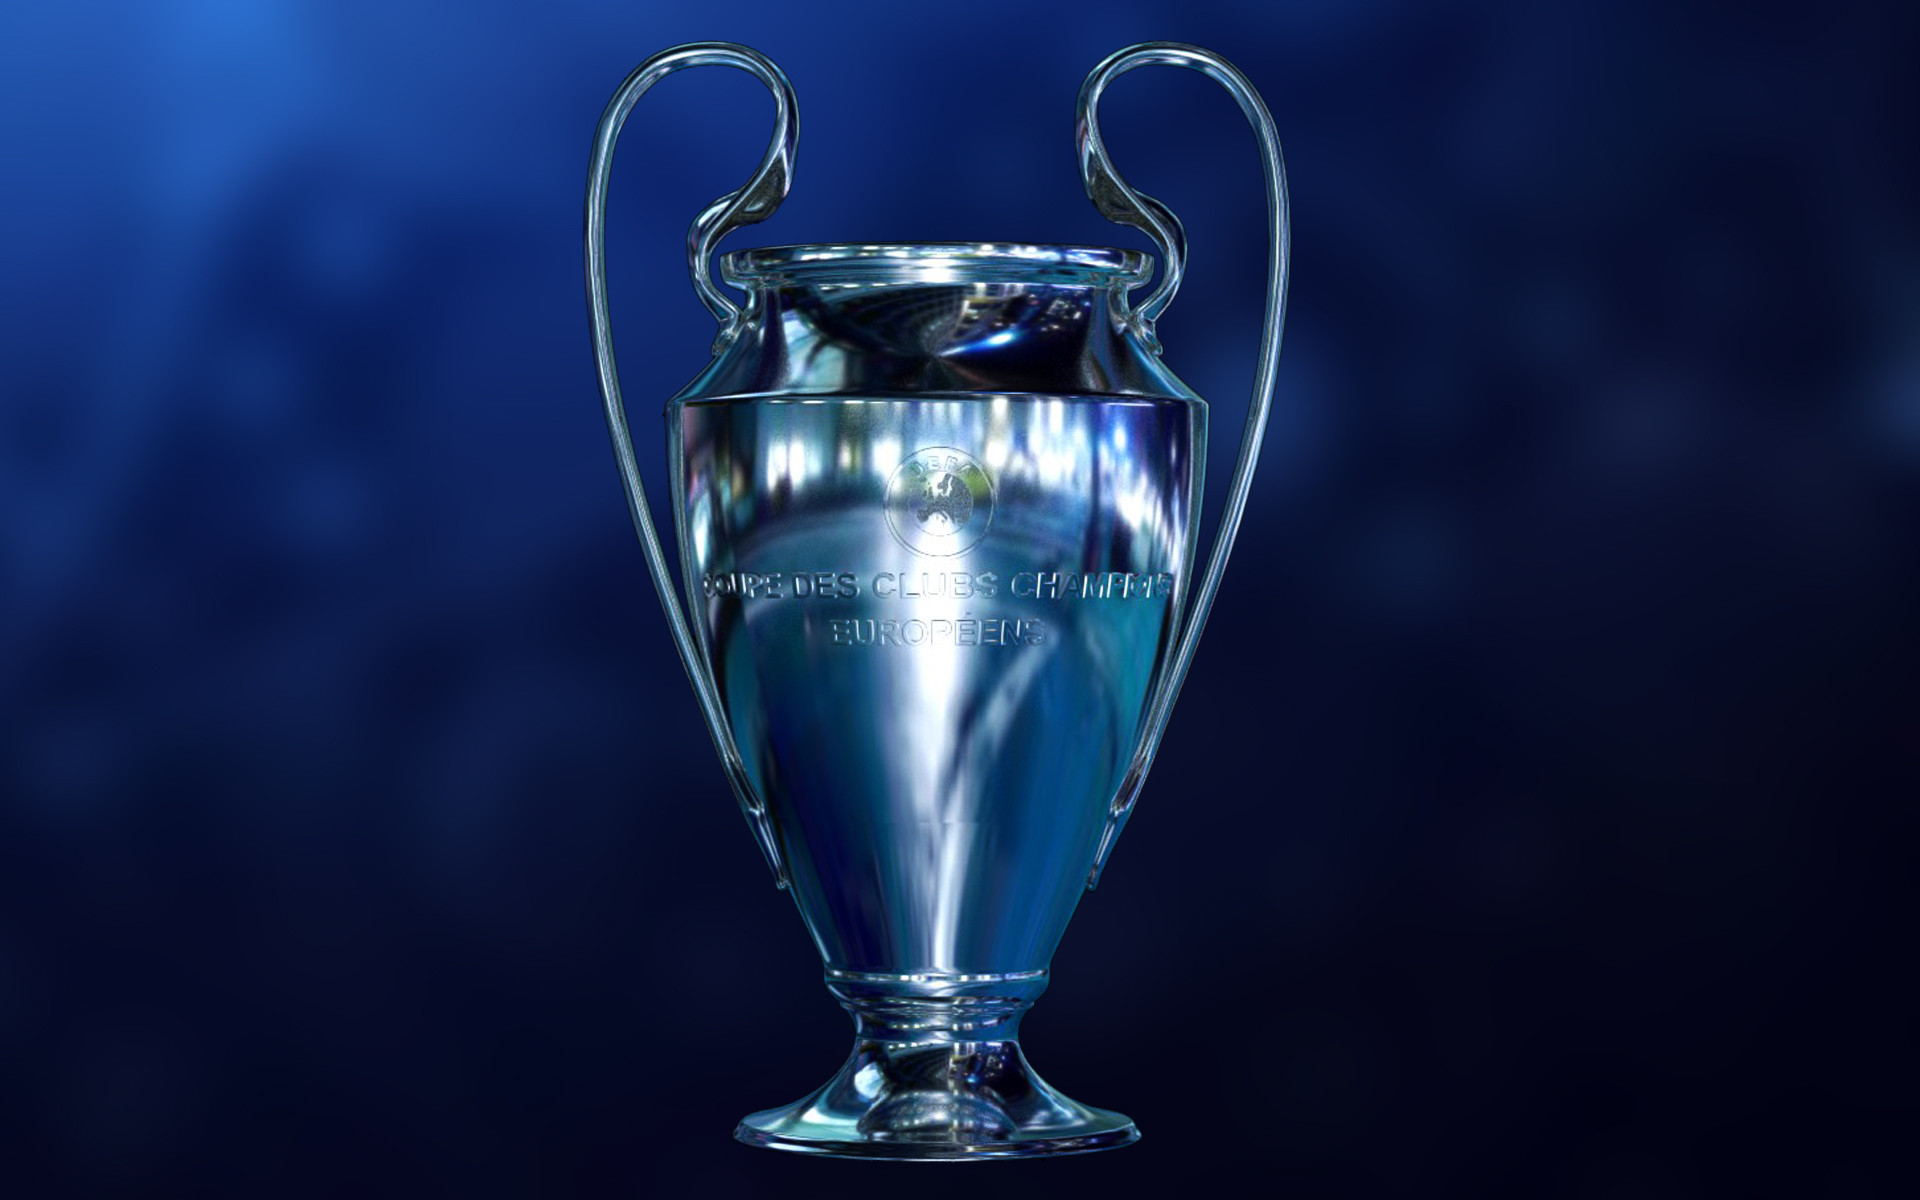 2018 UEFA Champions League Trophy, Reinaldo Artidiello